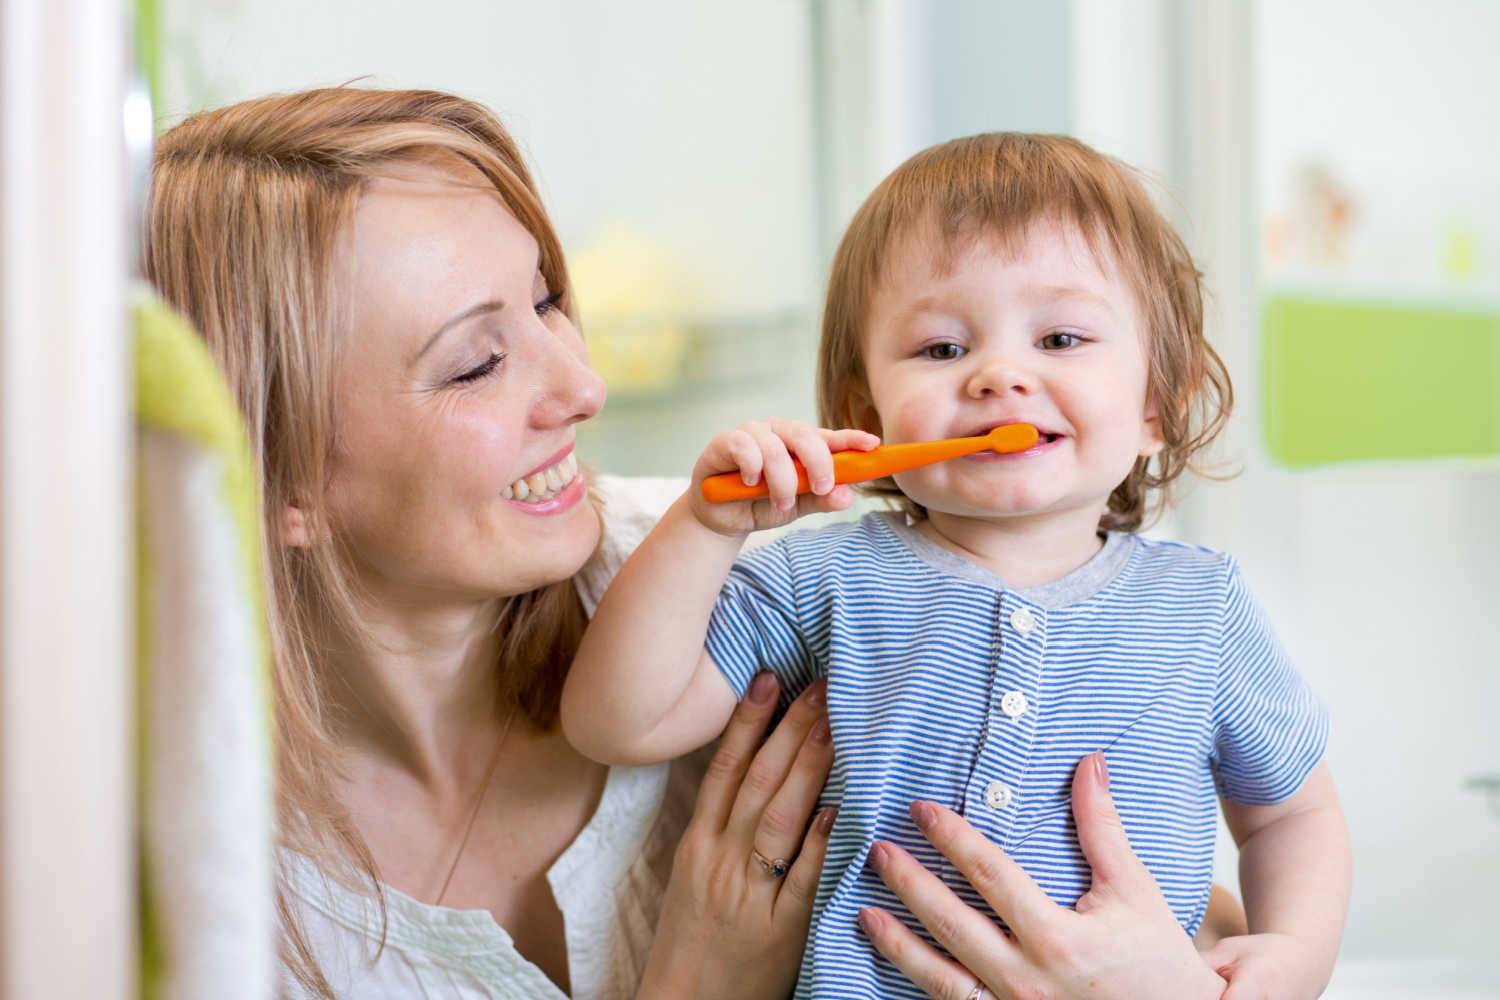 Teach your toddler good oral hygiene like brushing regularly